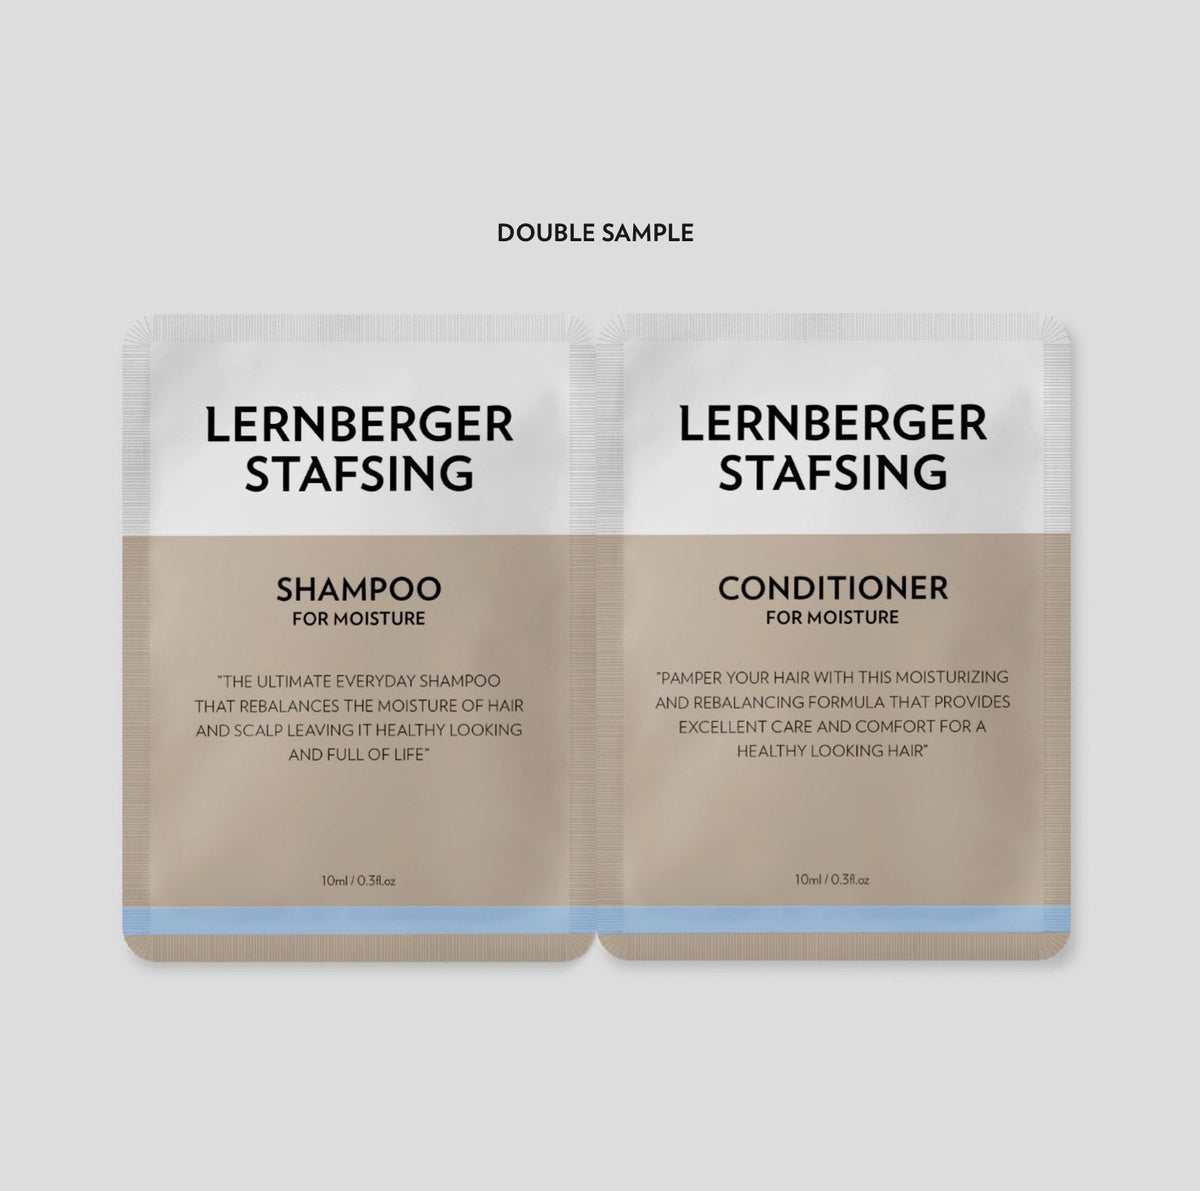 Lernberger Stafsing Conditioner for Moisture (1 * 10ml Sample)